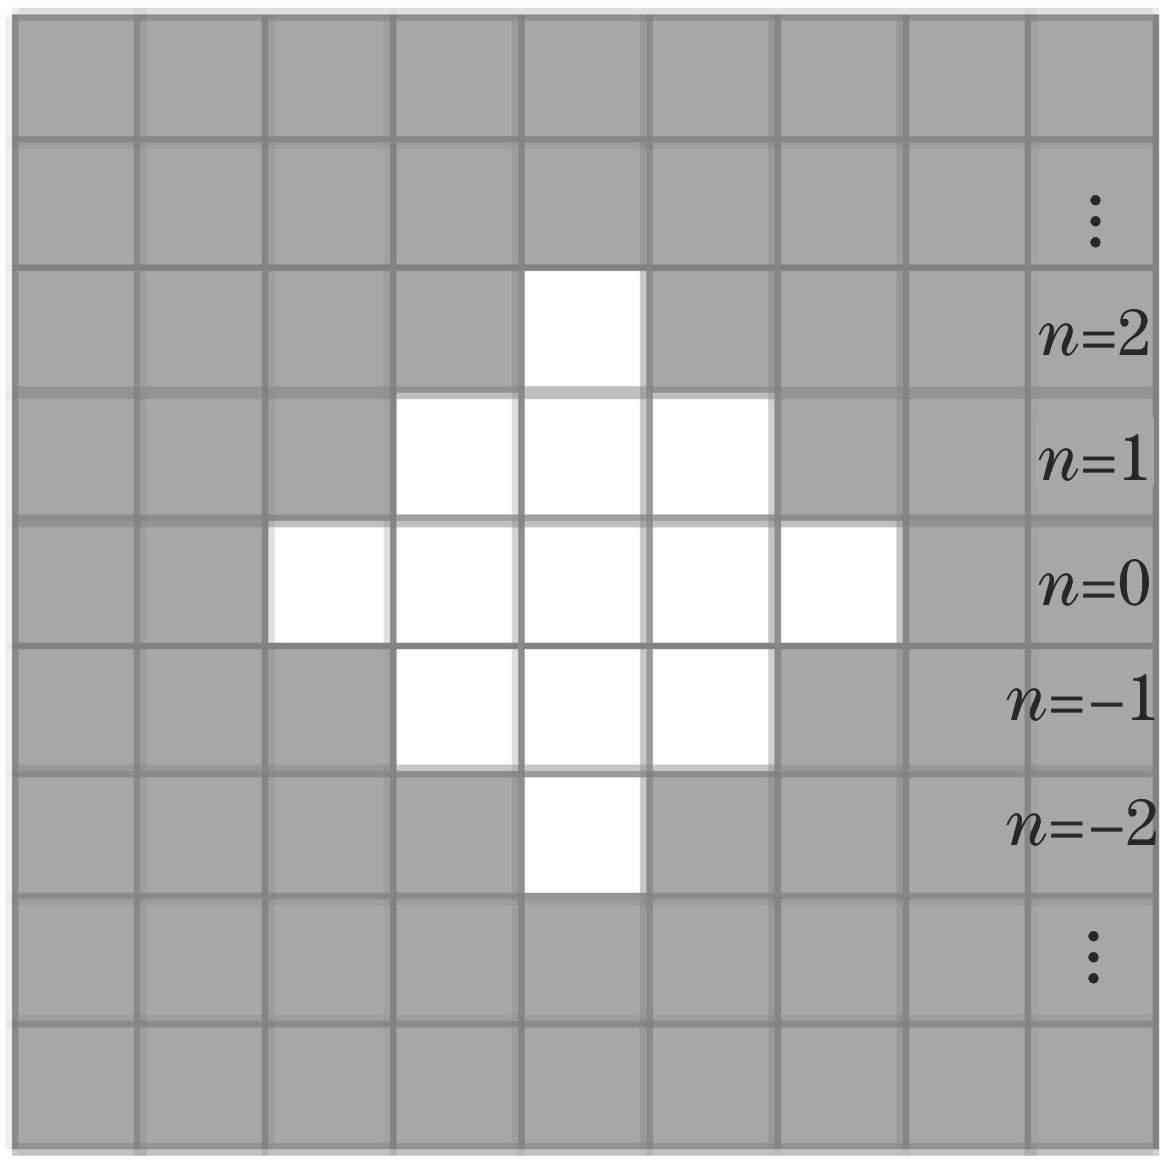 Calculation model of binary digital speckle pattern